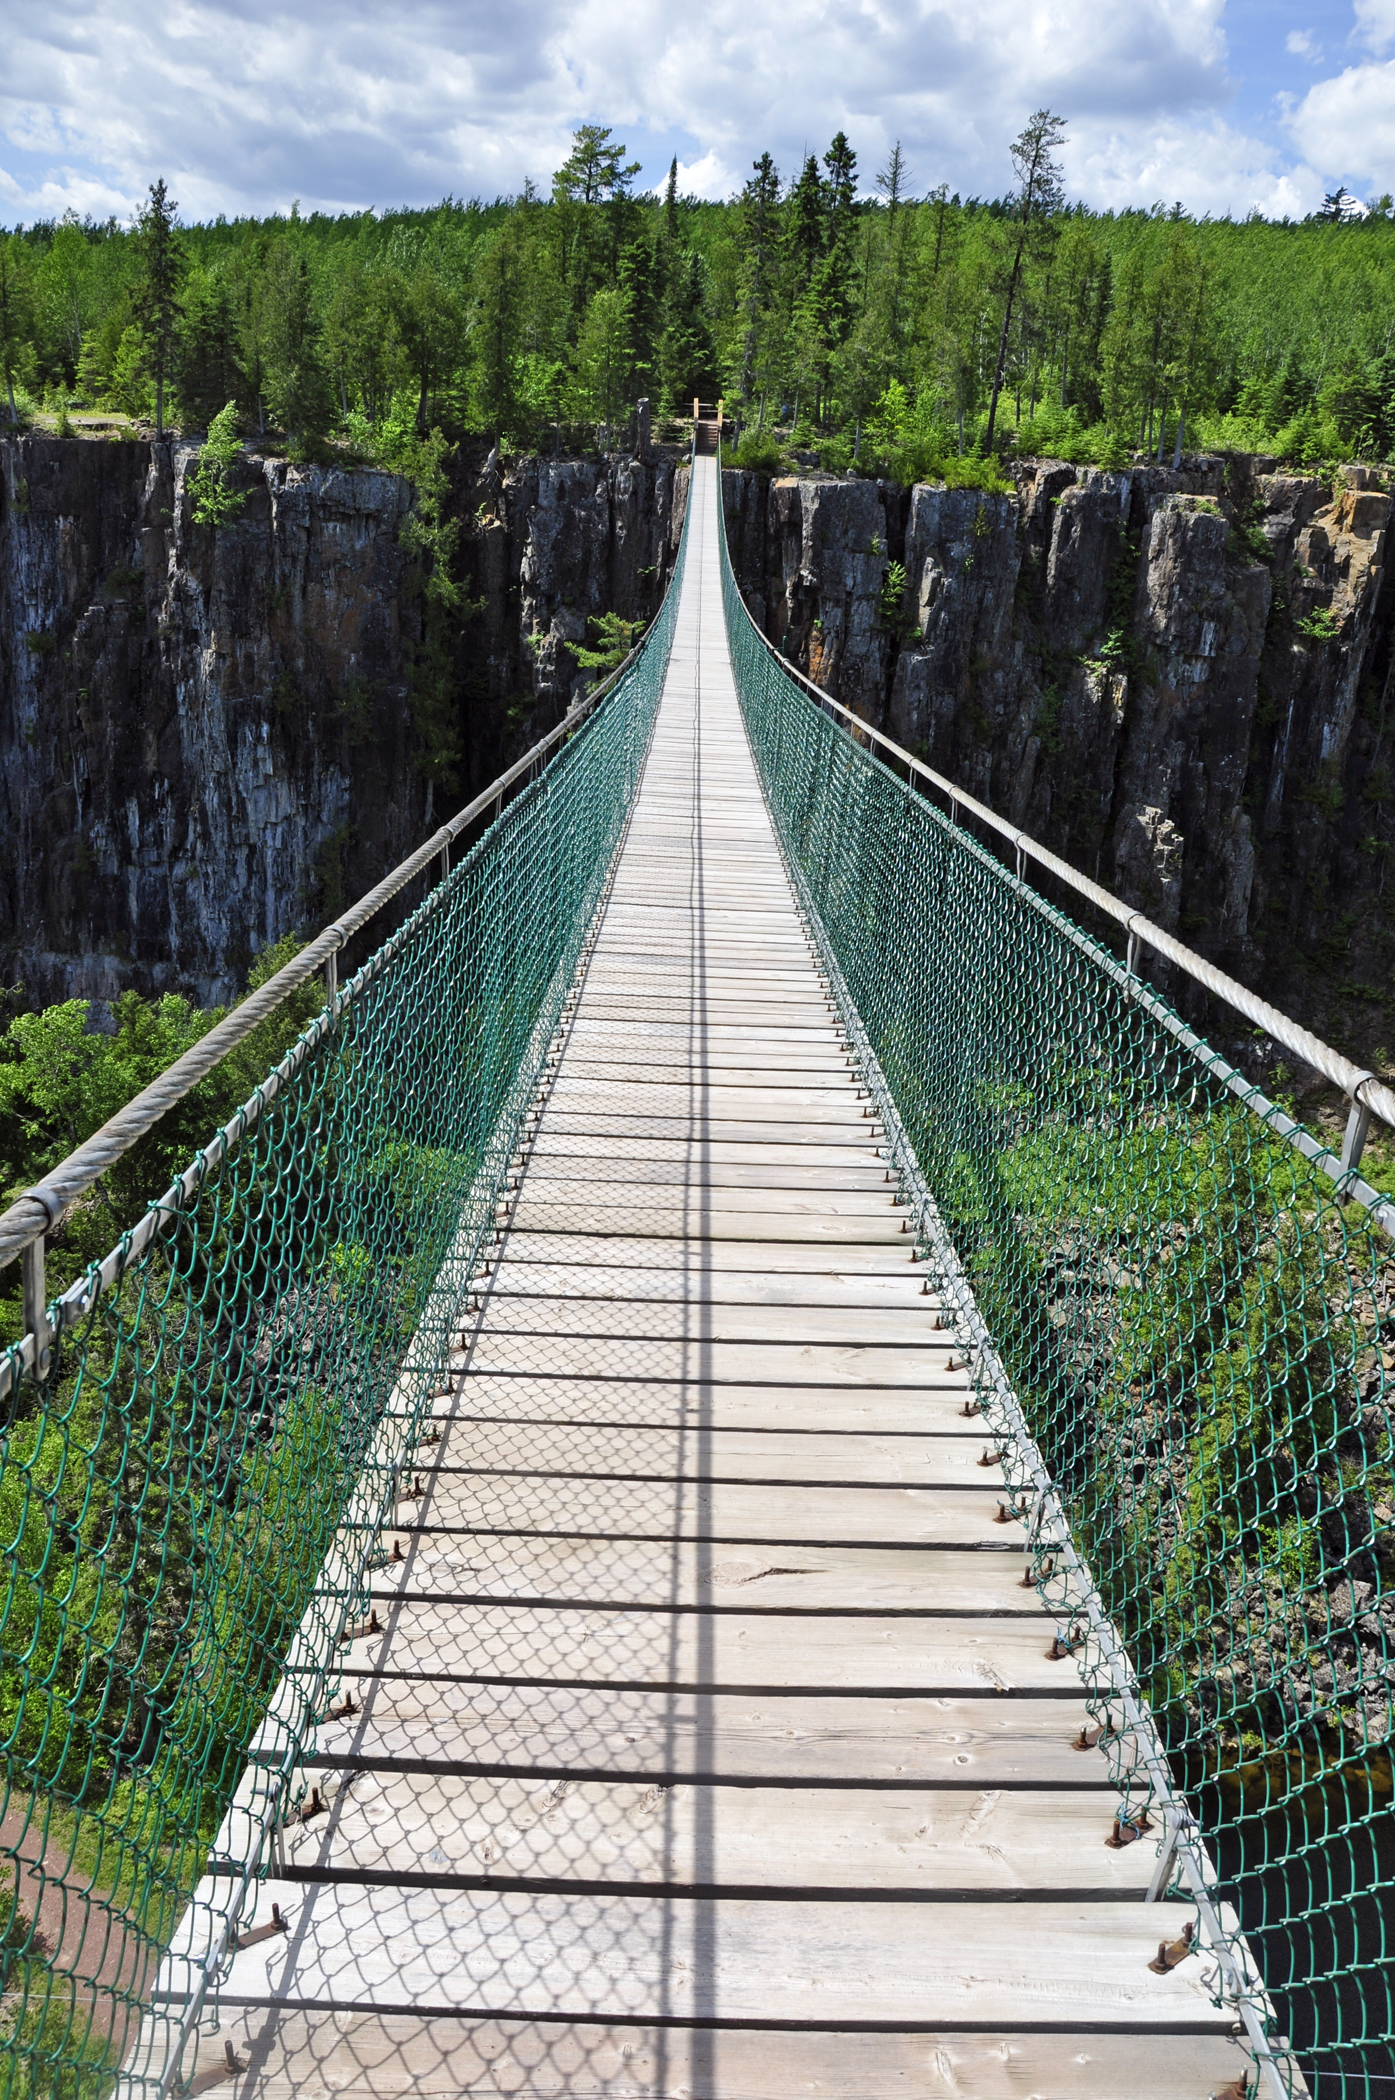 the 300 foot long suspension bridge